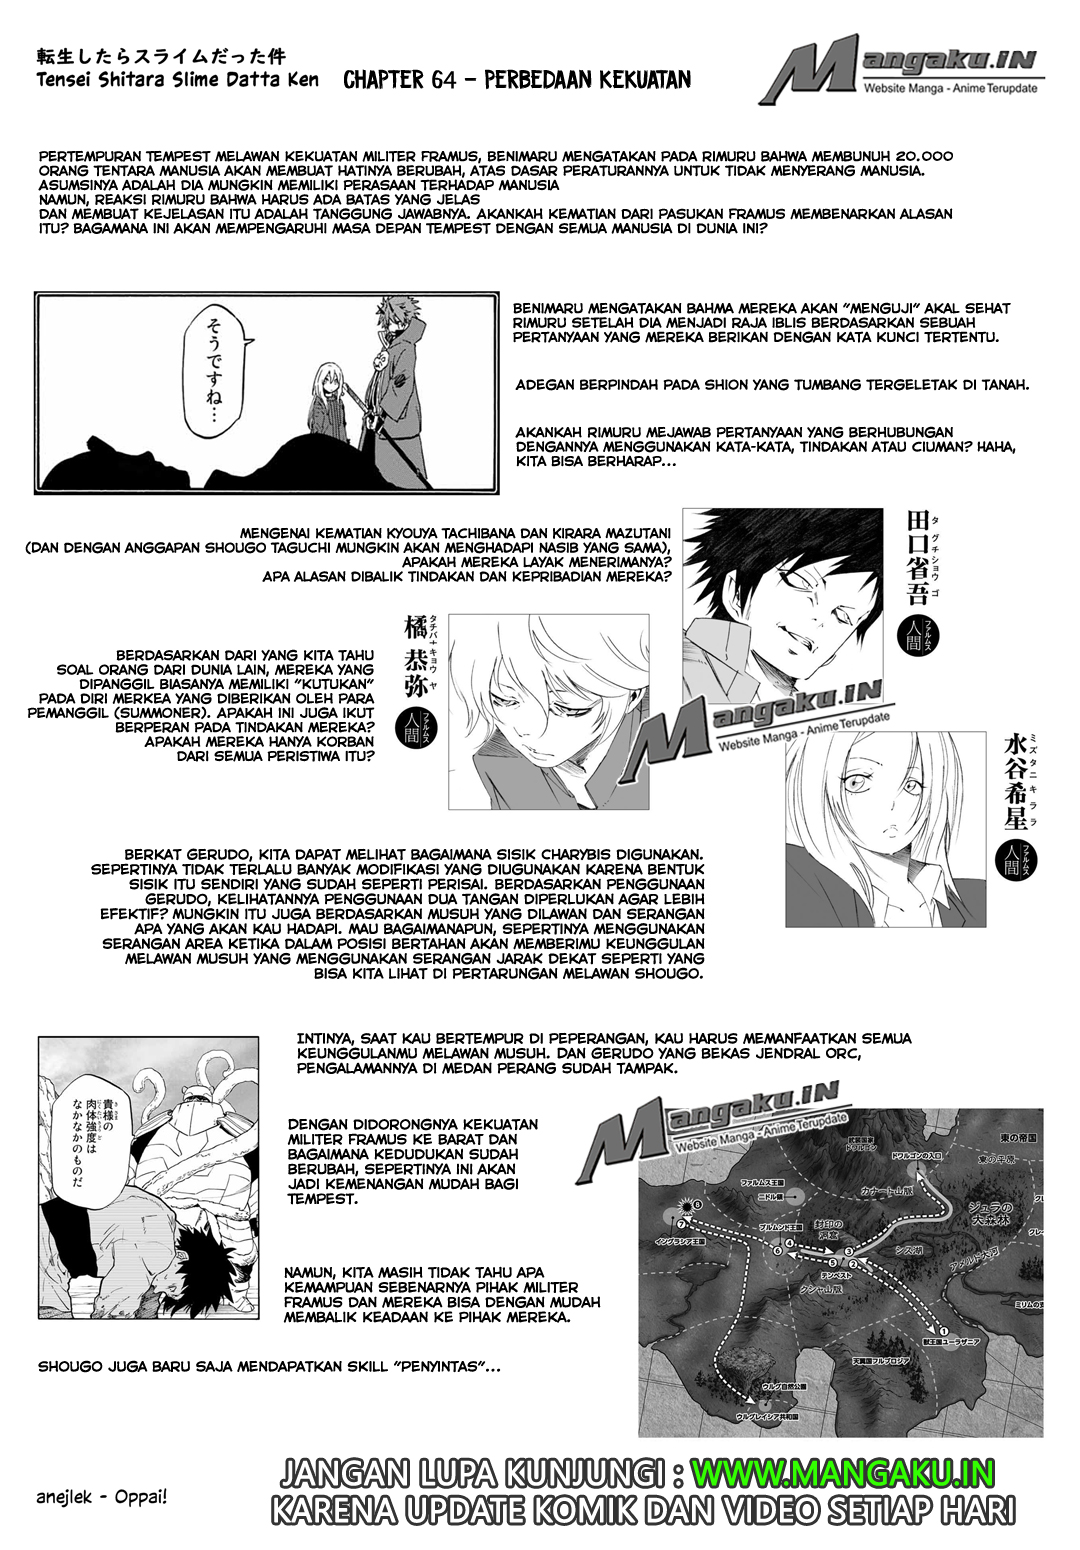 Tensei Shitara Slime Datta Ken Chapter 64-5